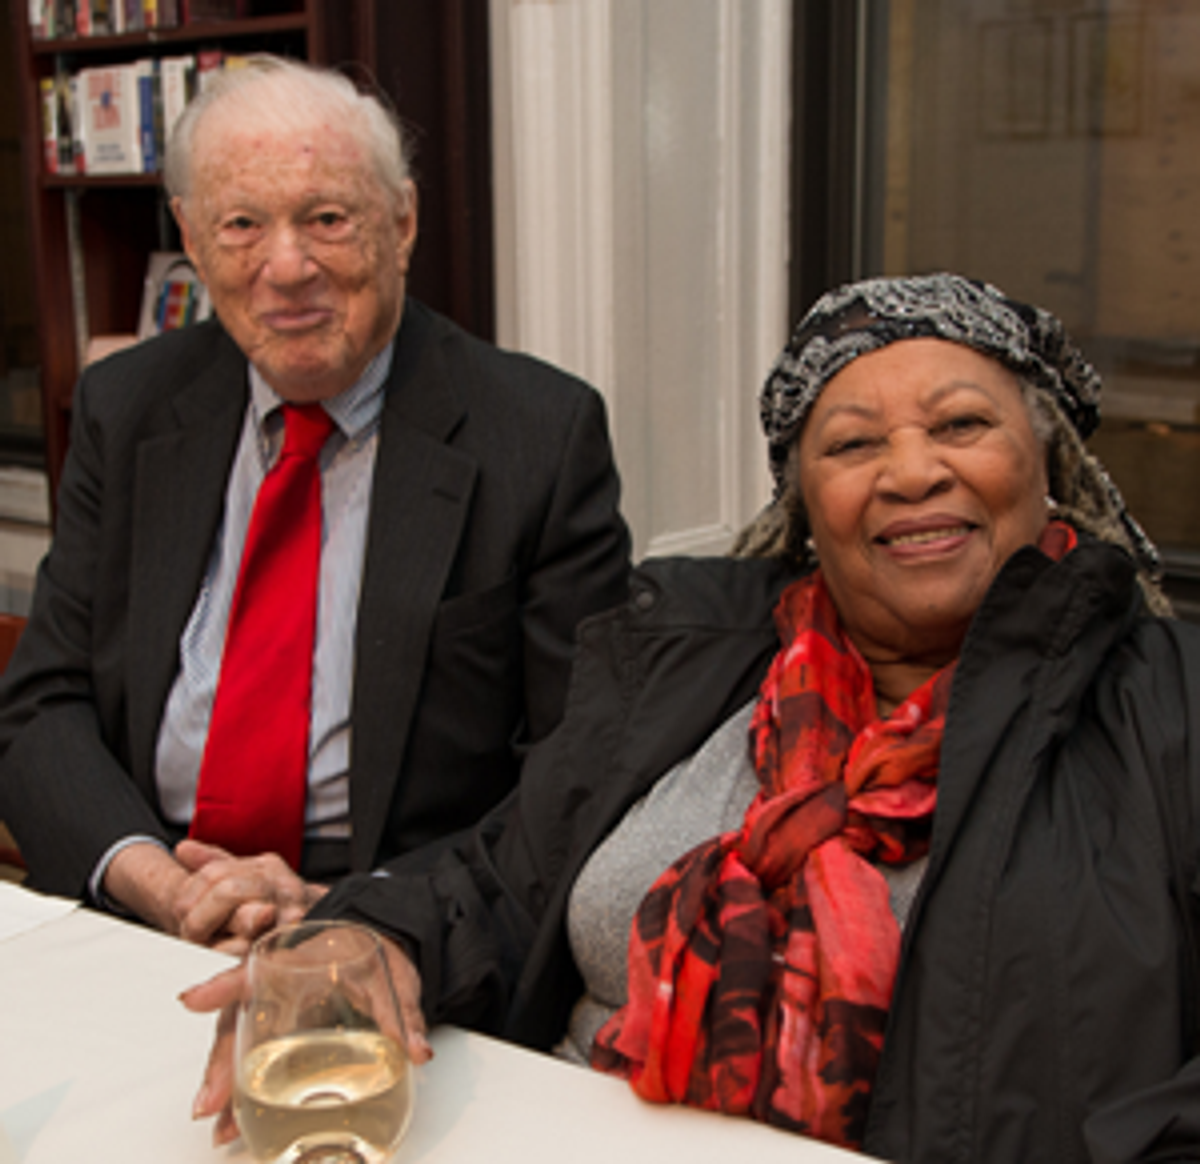 Robert with fellow honoree, Toni Morrison. (Photo: Tiffany L. Clark)